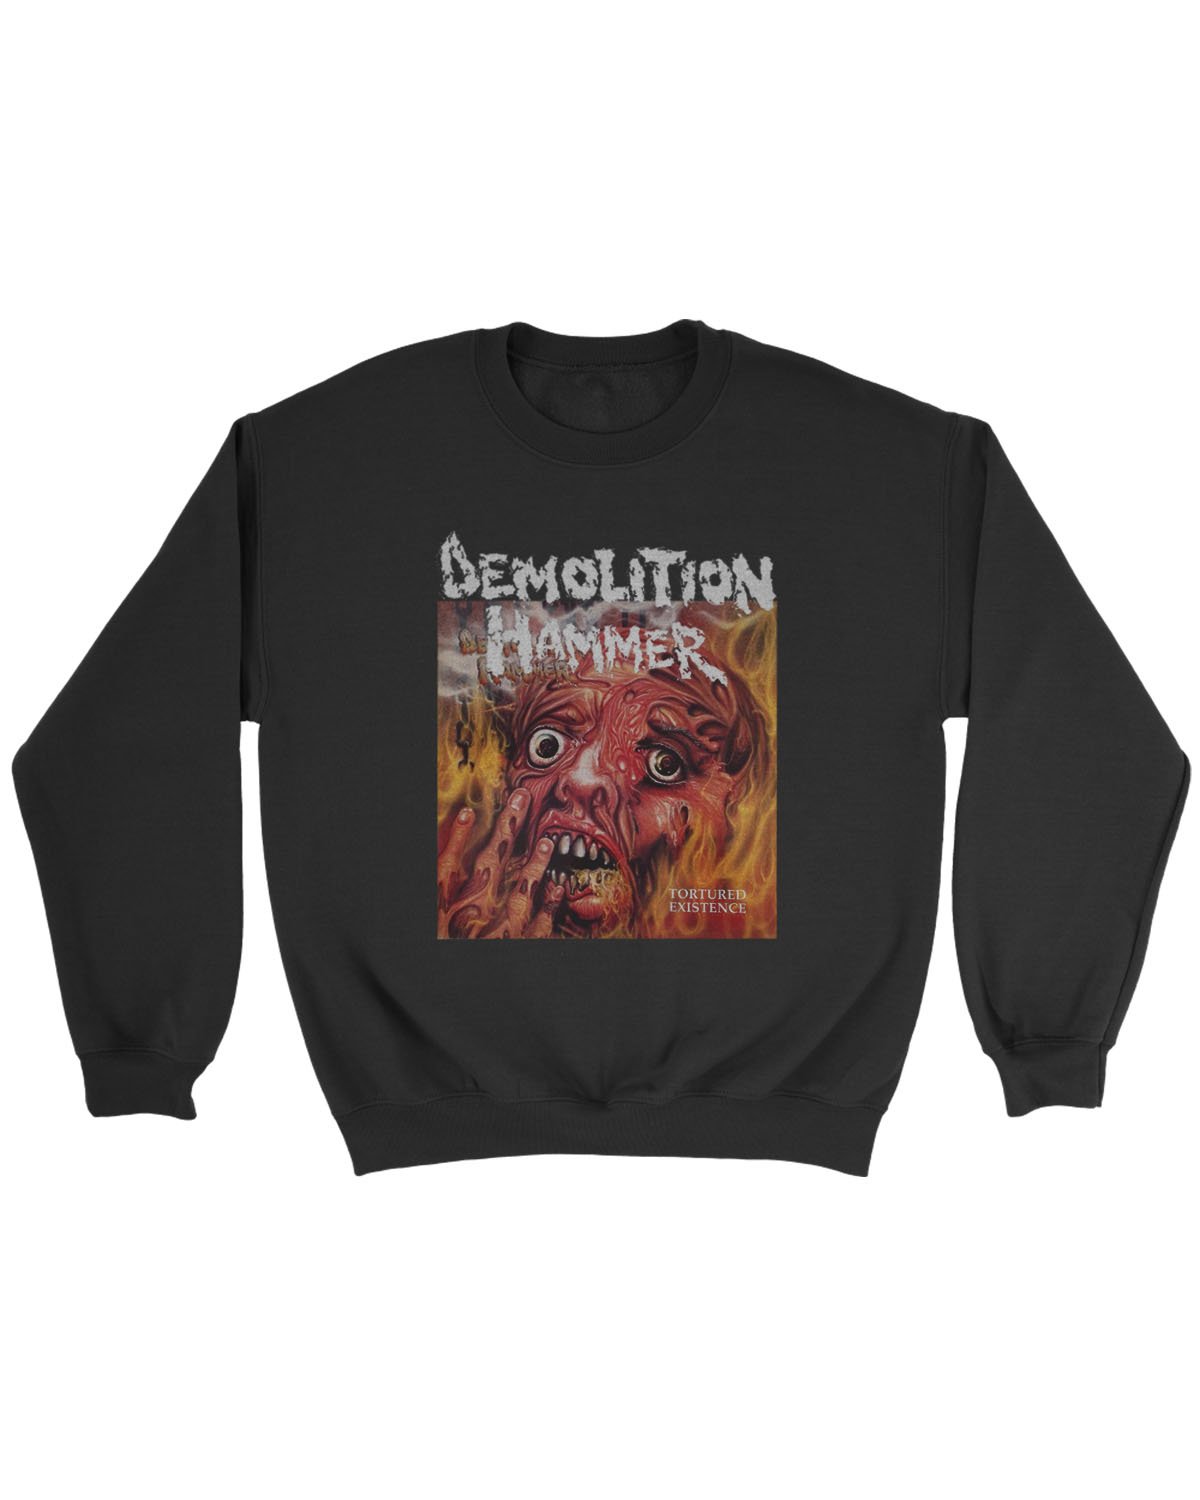 Demolition Hammer Tortured Existence Cover Sweatshirt